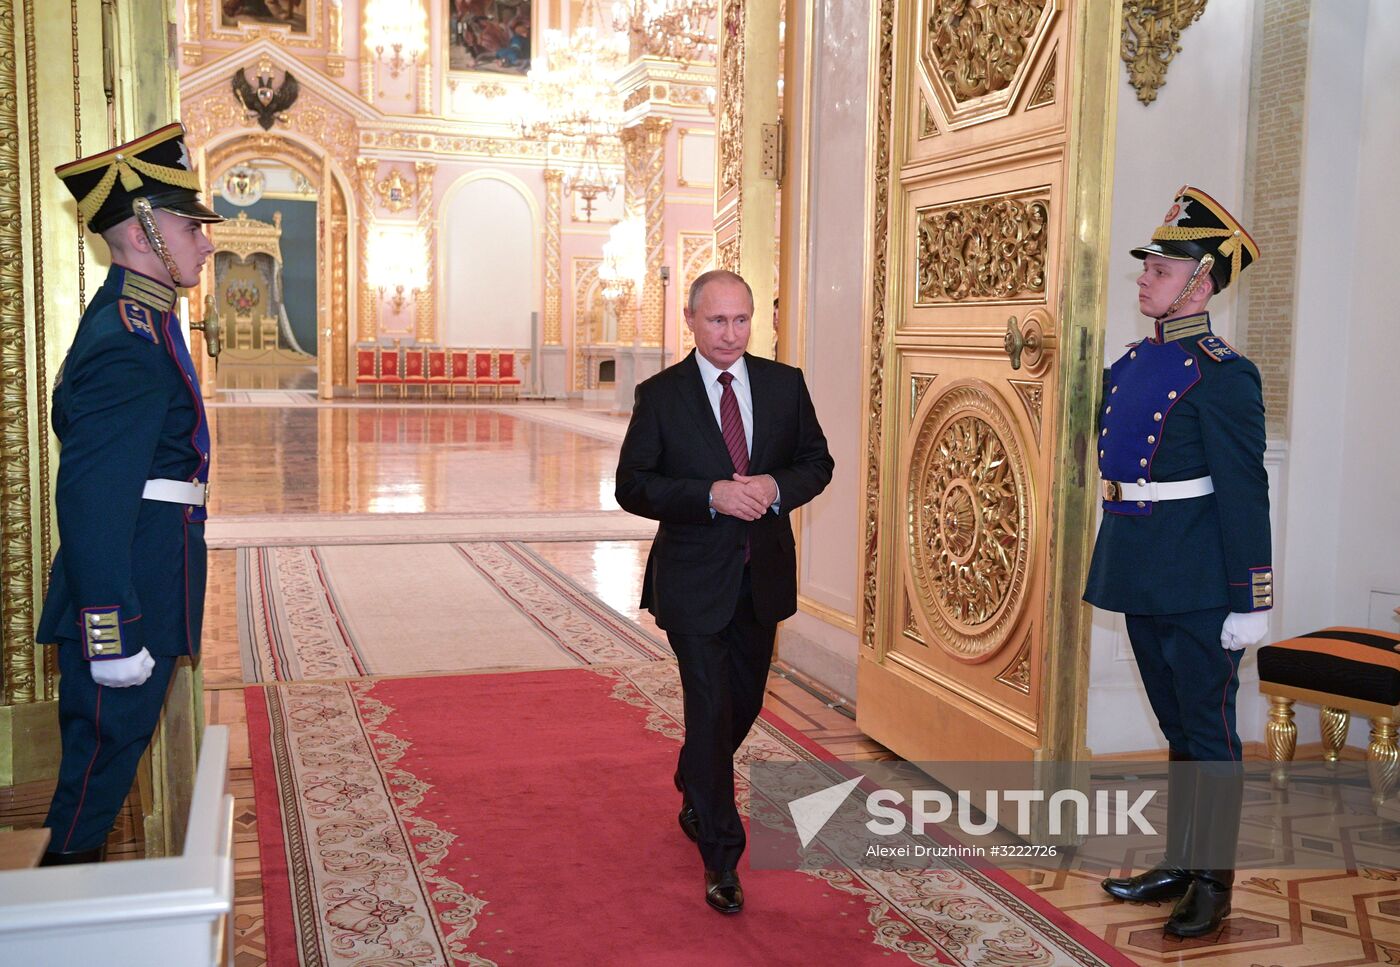 Russian President Vladimir Putin meets with senior officers at the Kremlin